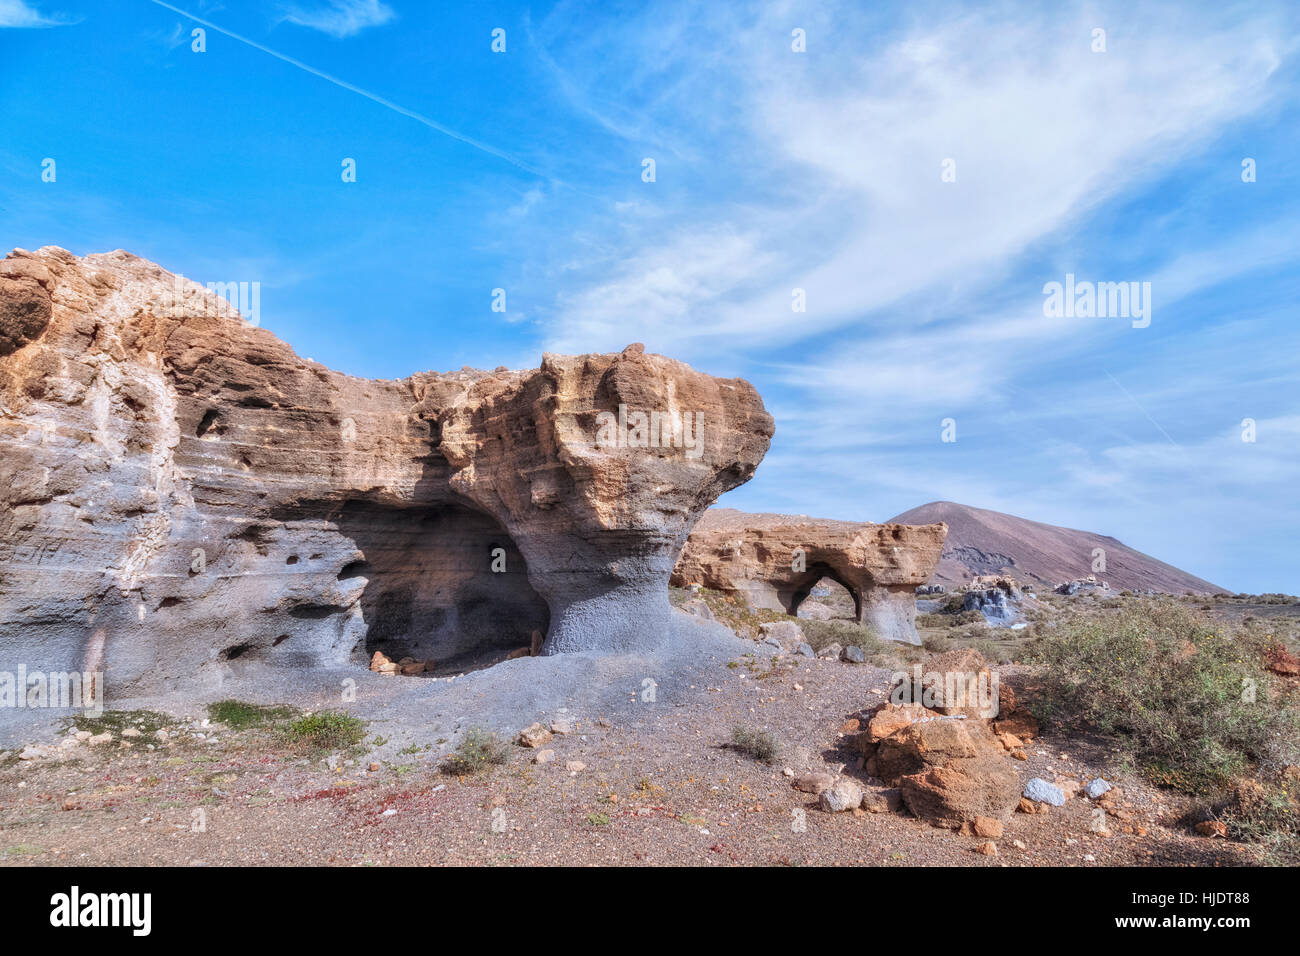 Erosion of volcanic layers, Teseguite, Guatizia, Lanzarote, Canary Islands, Spain Stock Photo